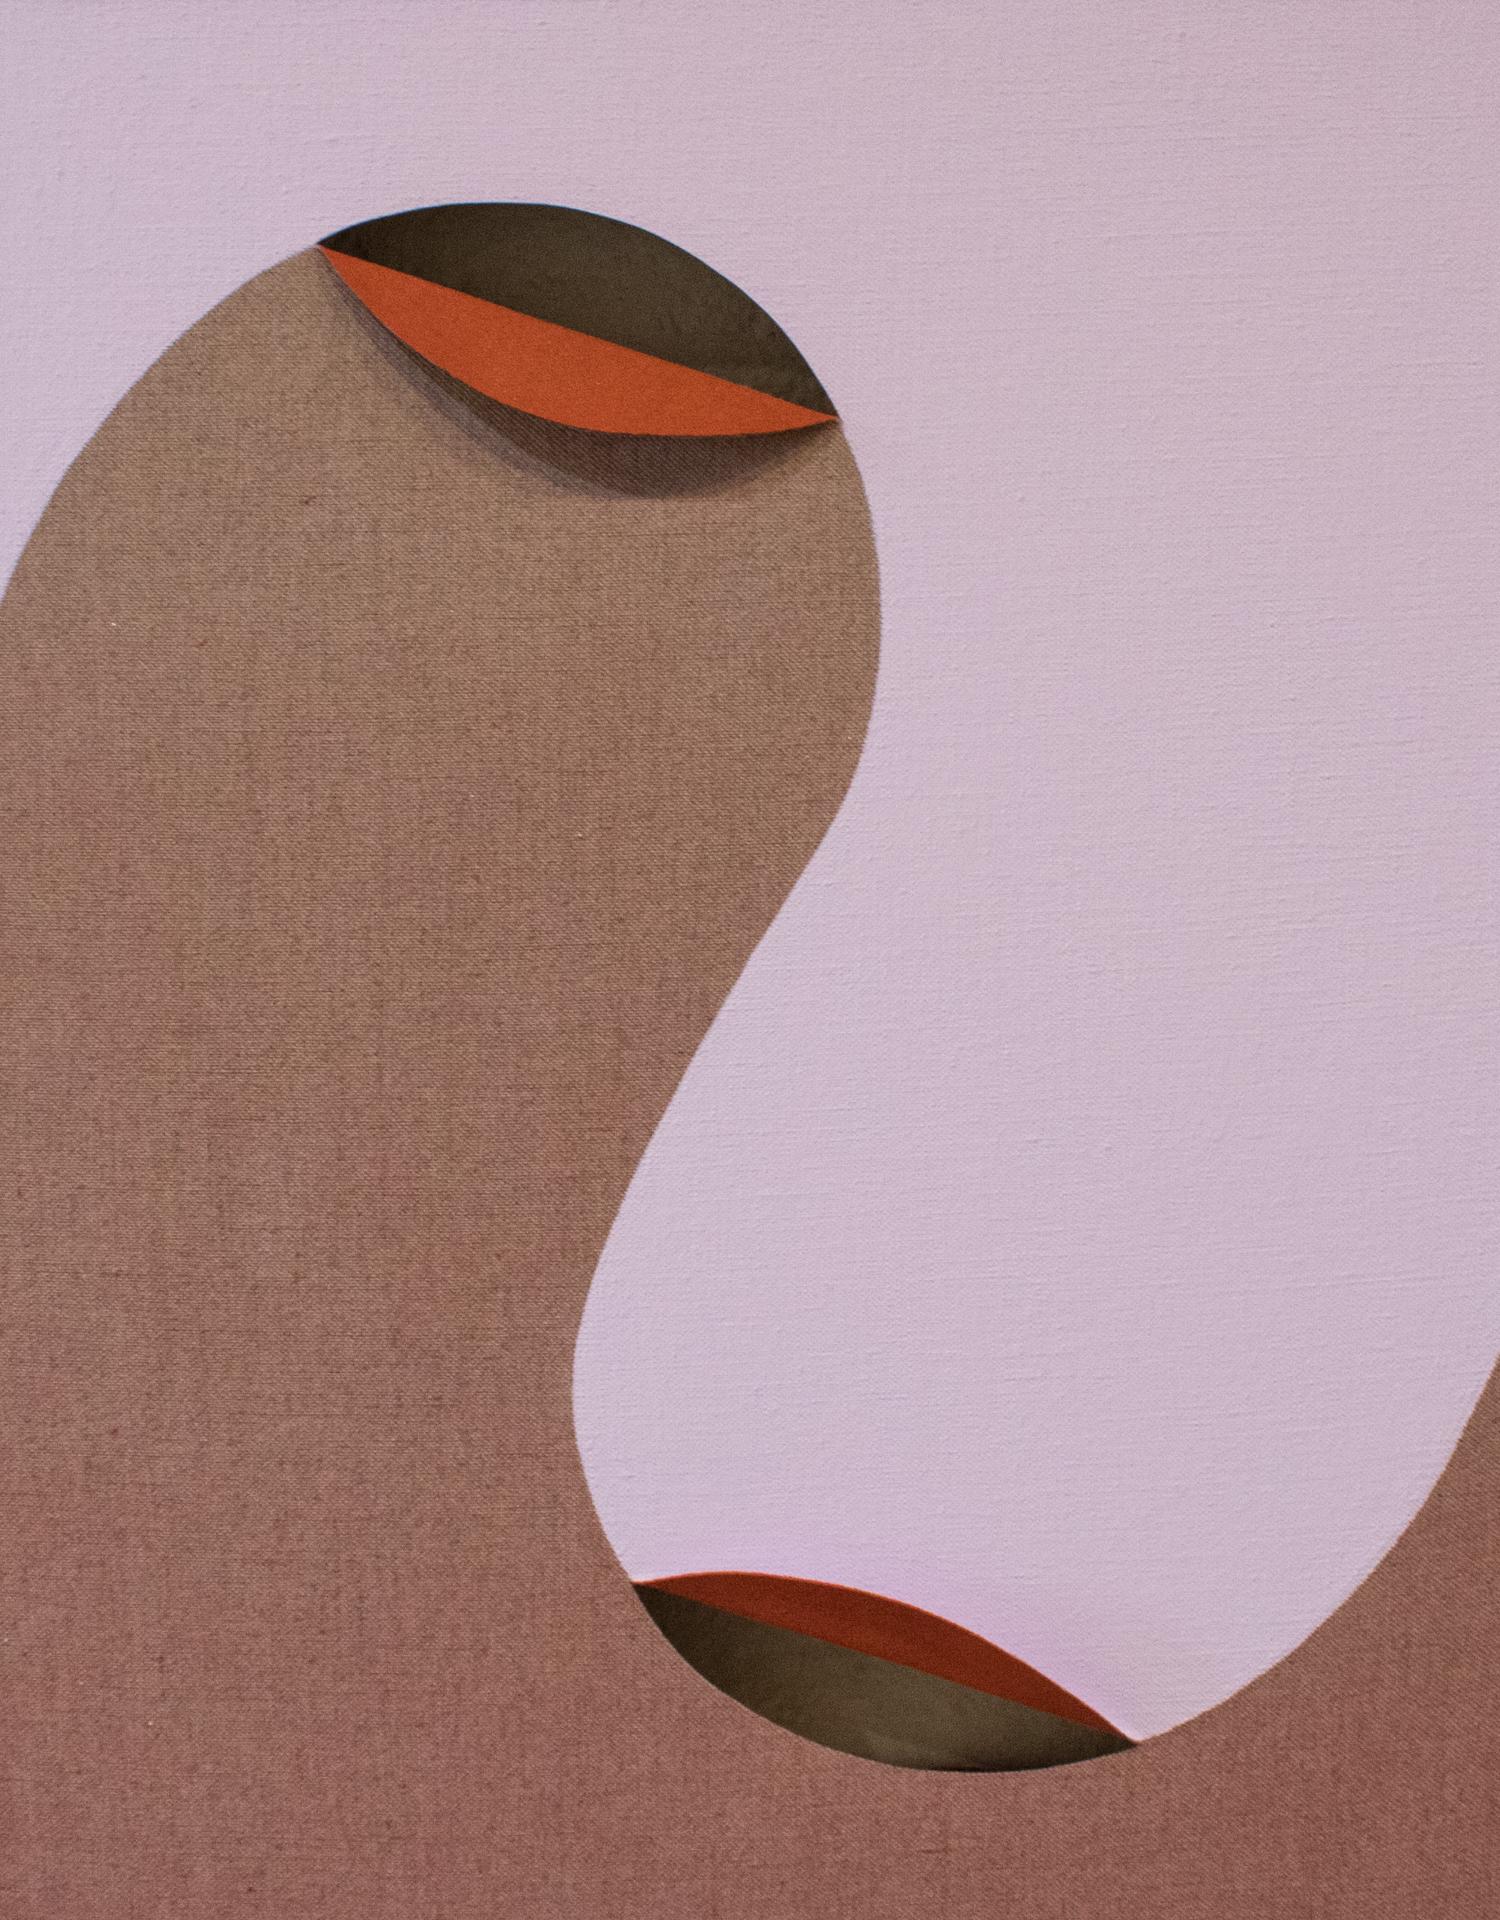 DYAD 22 - Contemporary - Oil & Acrylic on Linen, Pink, Tan, Feminist 